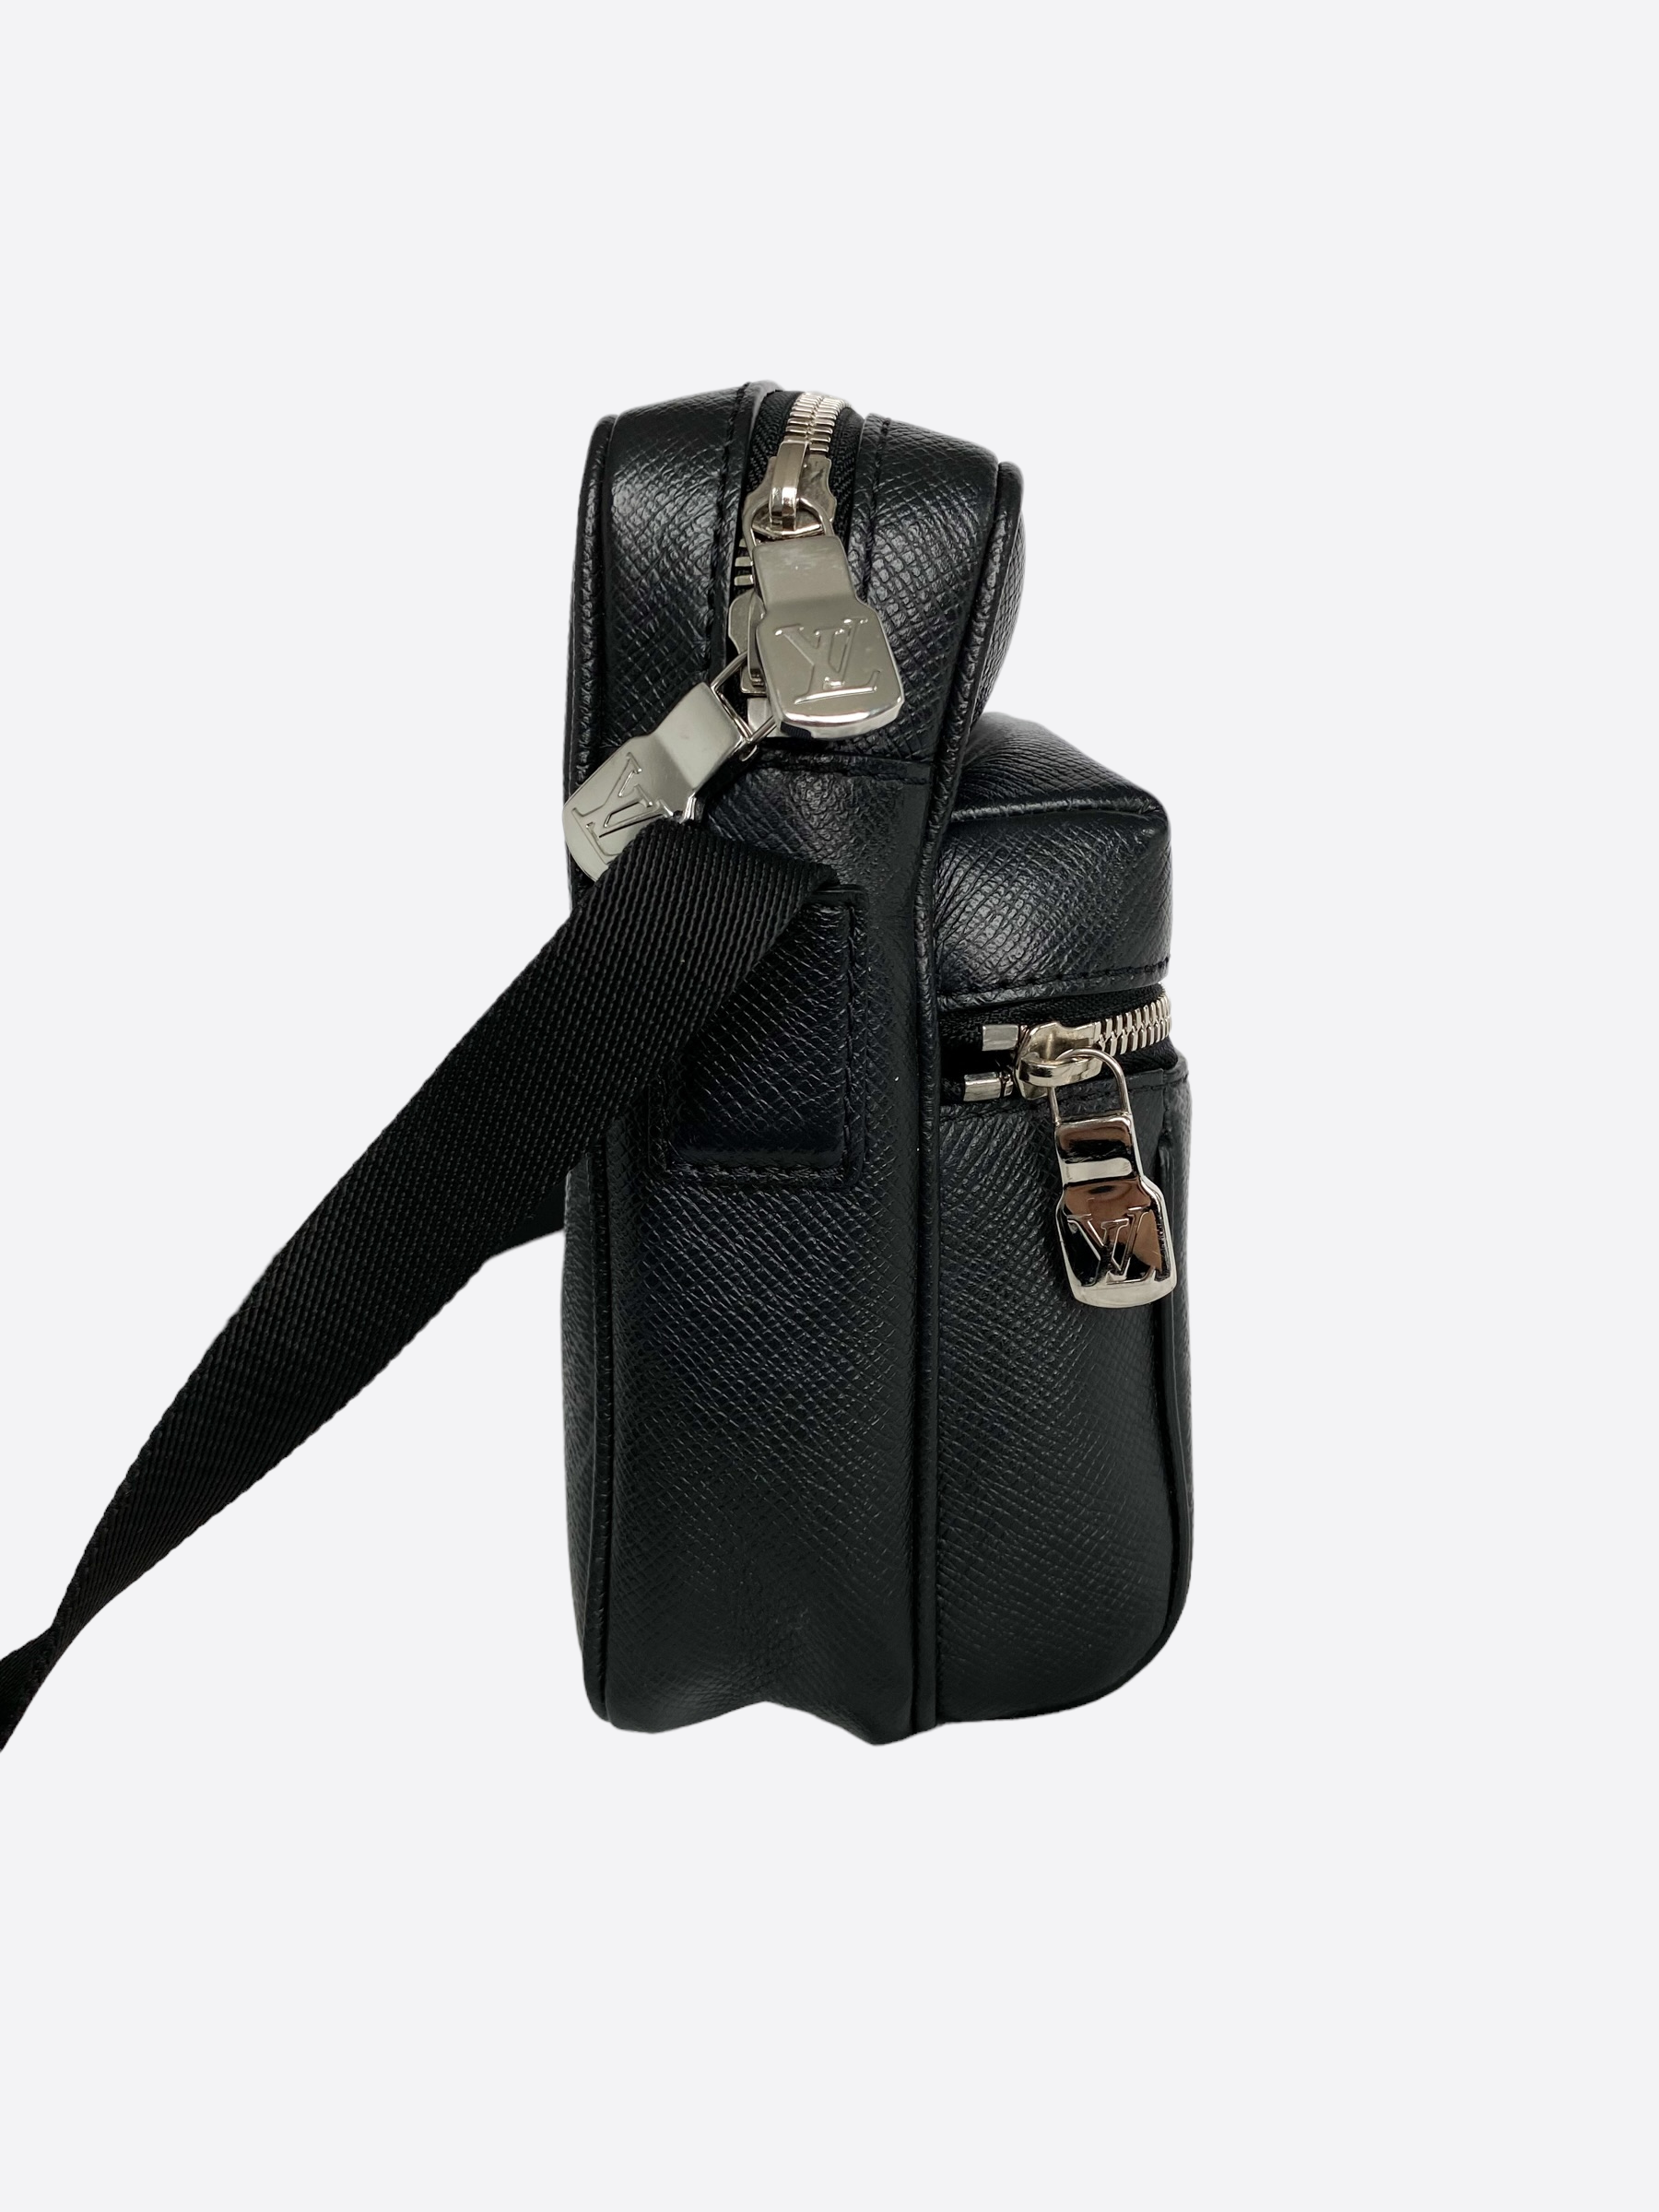 Louis Vuitton - Outdoor Messenger Bag - Monogram Eclipse - Pre-Loved